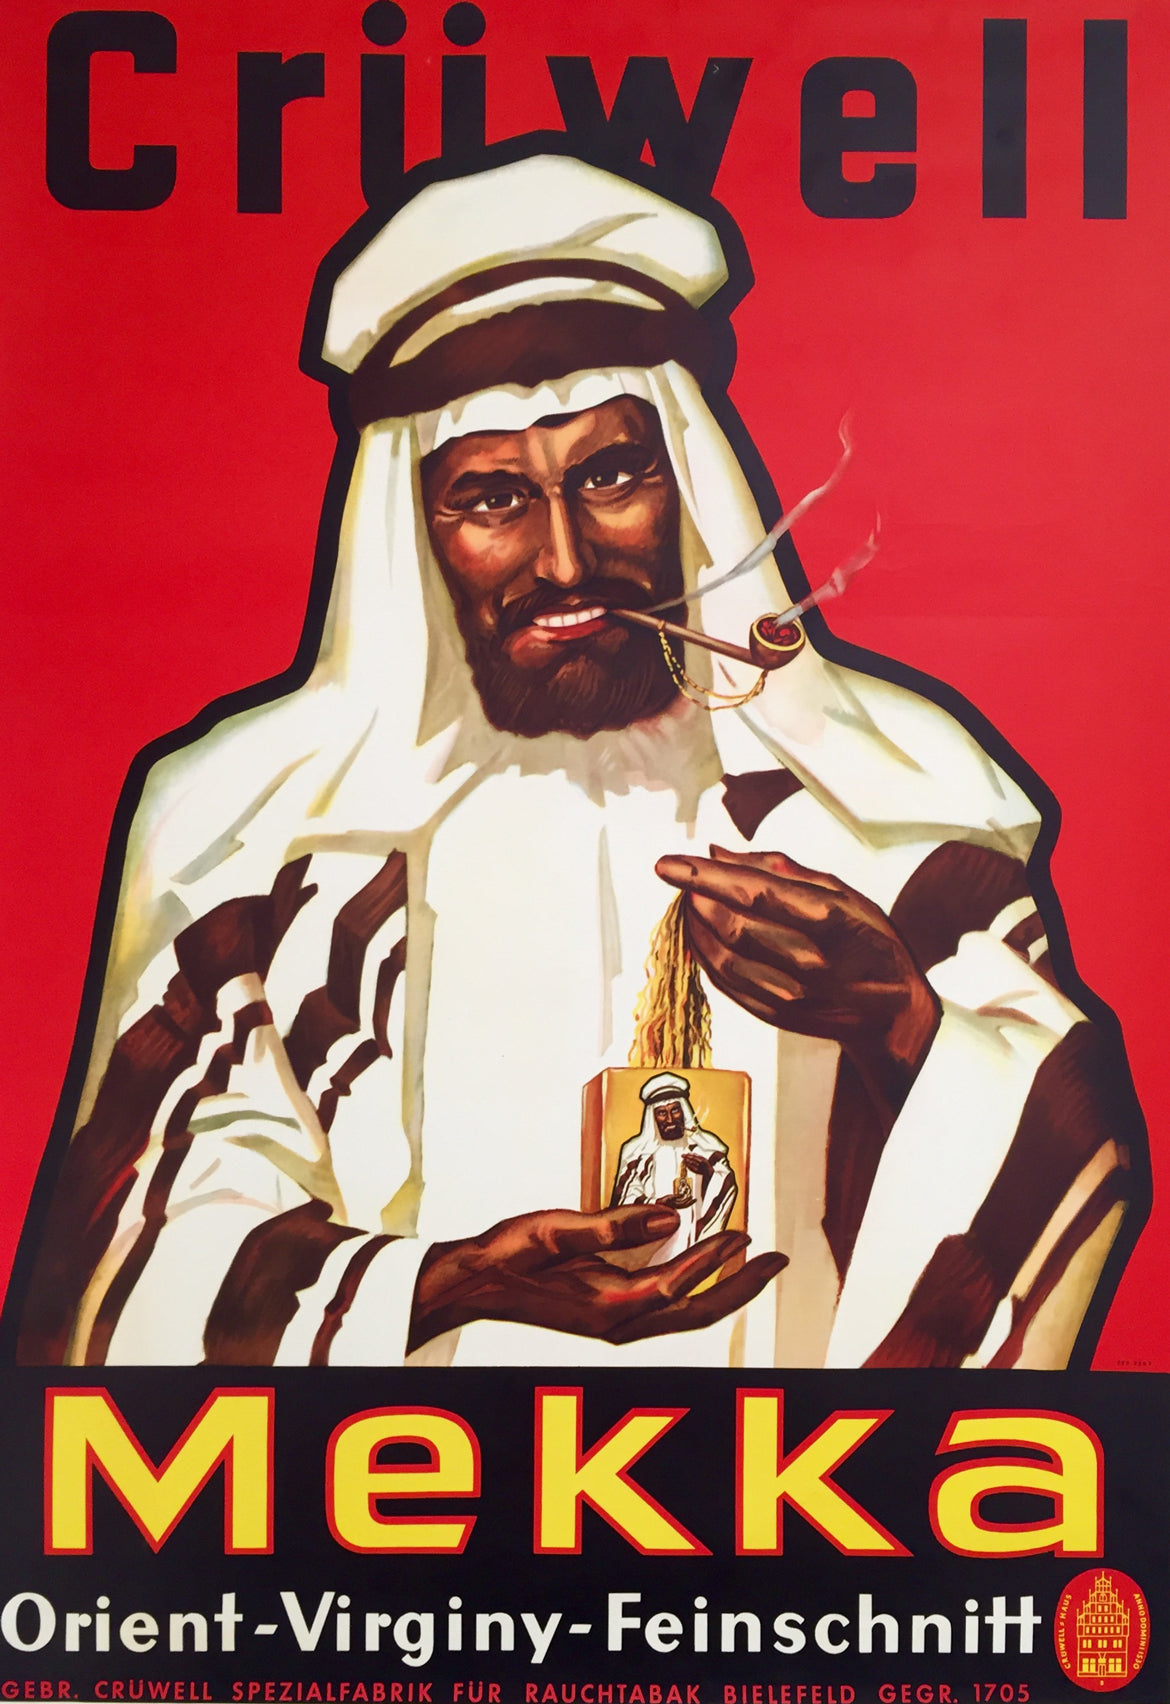 Affiche publicitaire pour le tabac à fumer Mekka Crüwell  " Orient- Virginy- Feinschnitt " c-1930